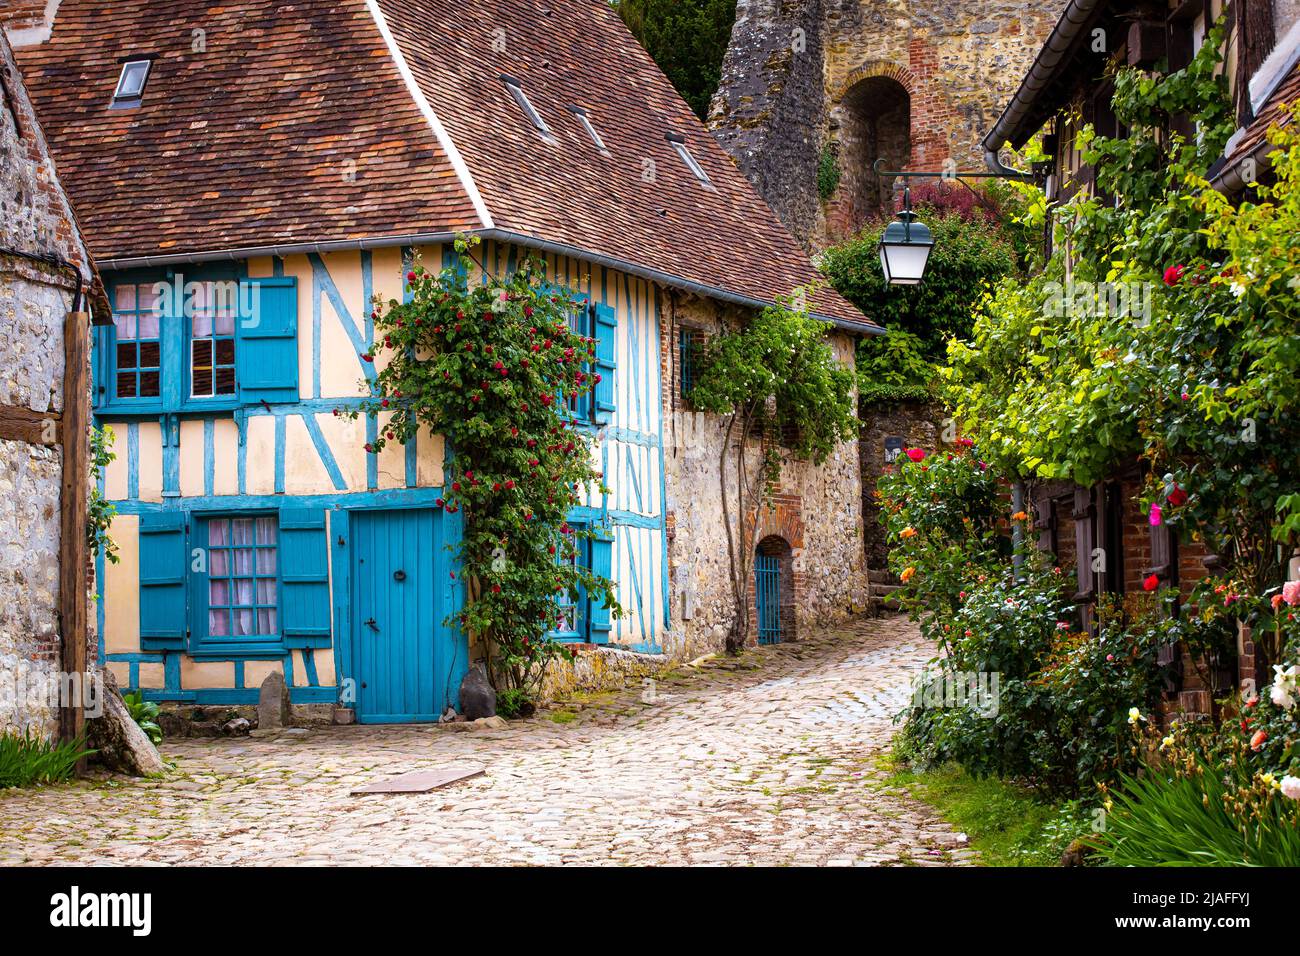 Village of Gerberoy, Oise, France Stock Photo